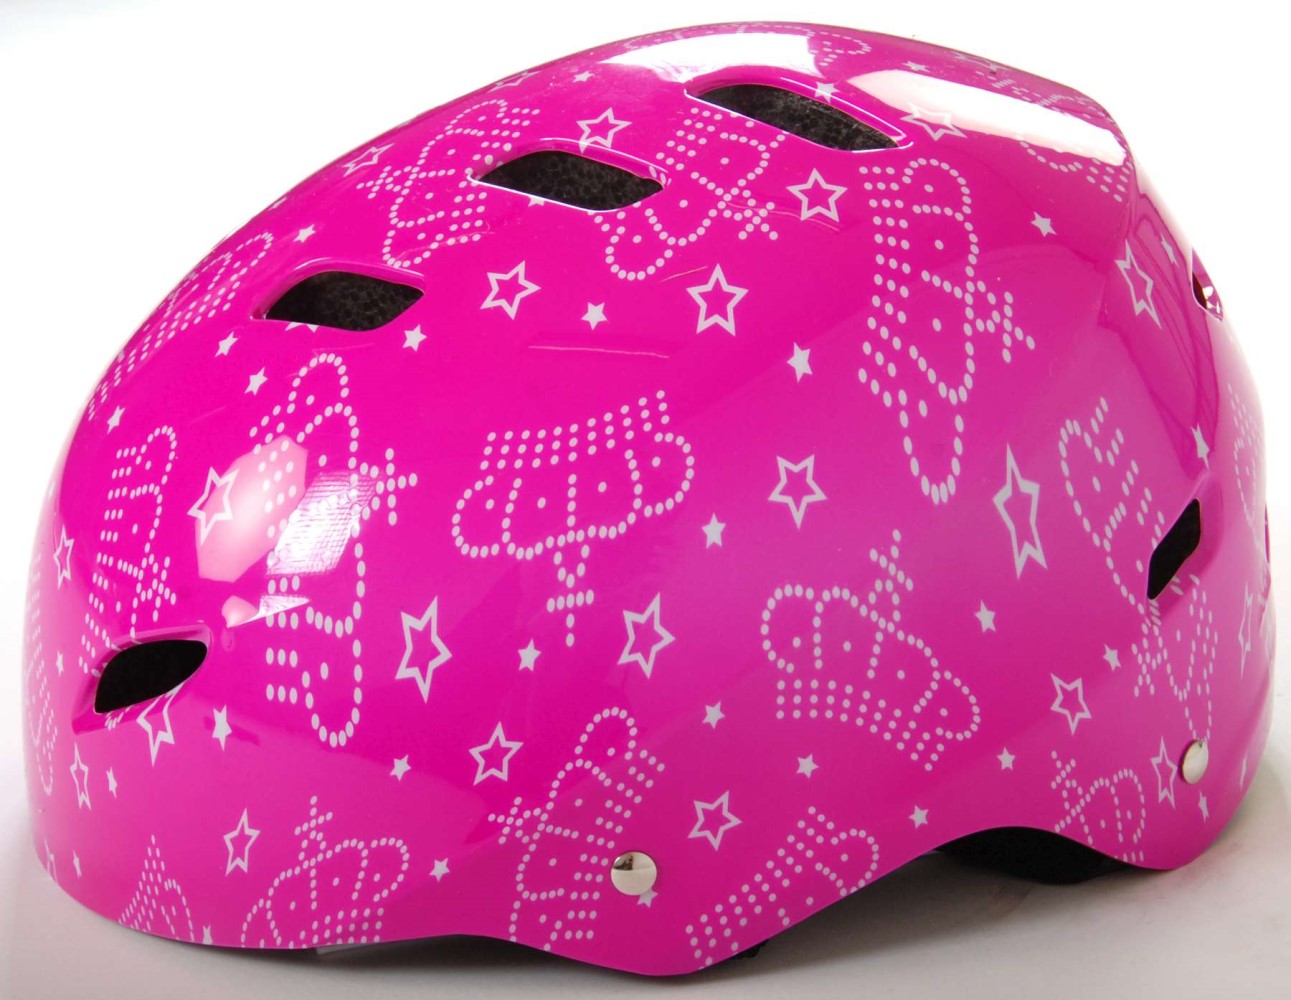 Fahrrad/Skate Helm in Rosa 55-57 cm Kinderhelm